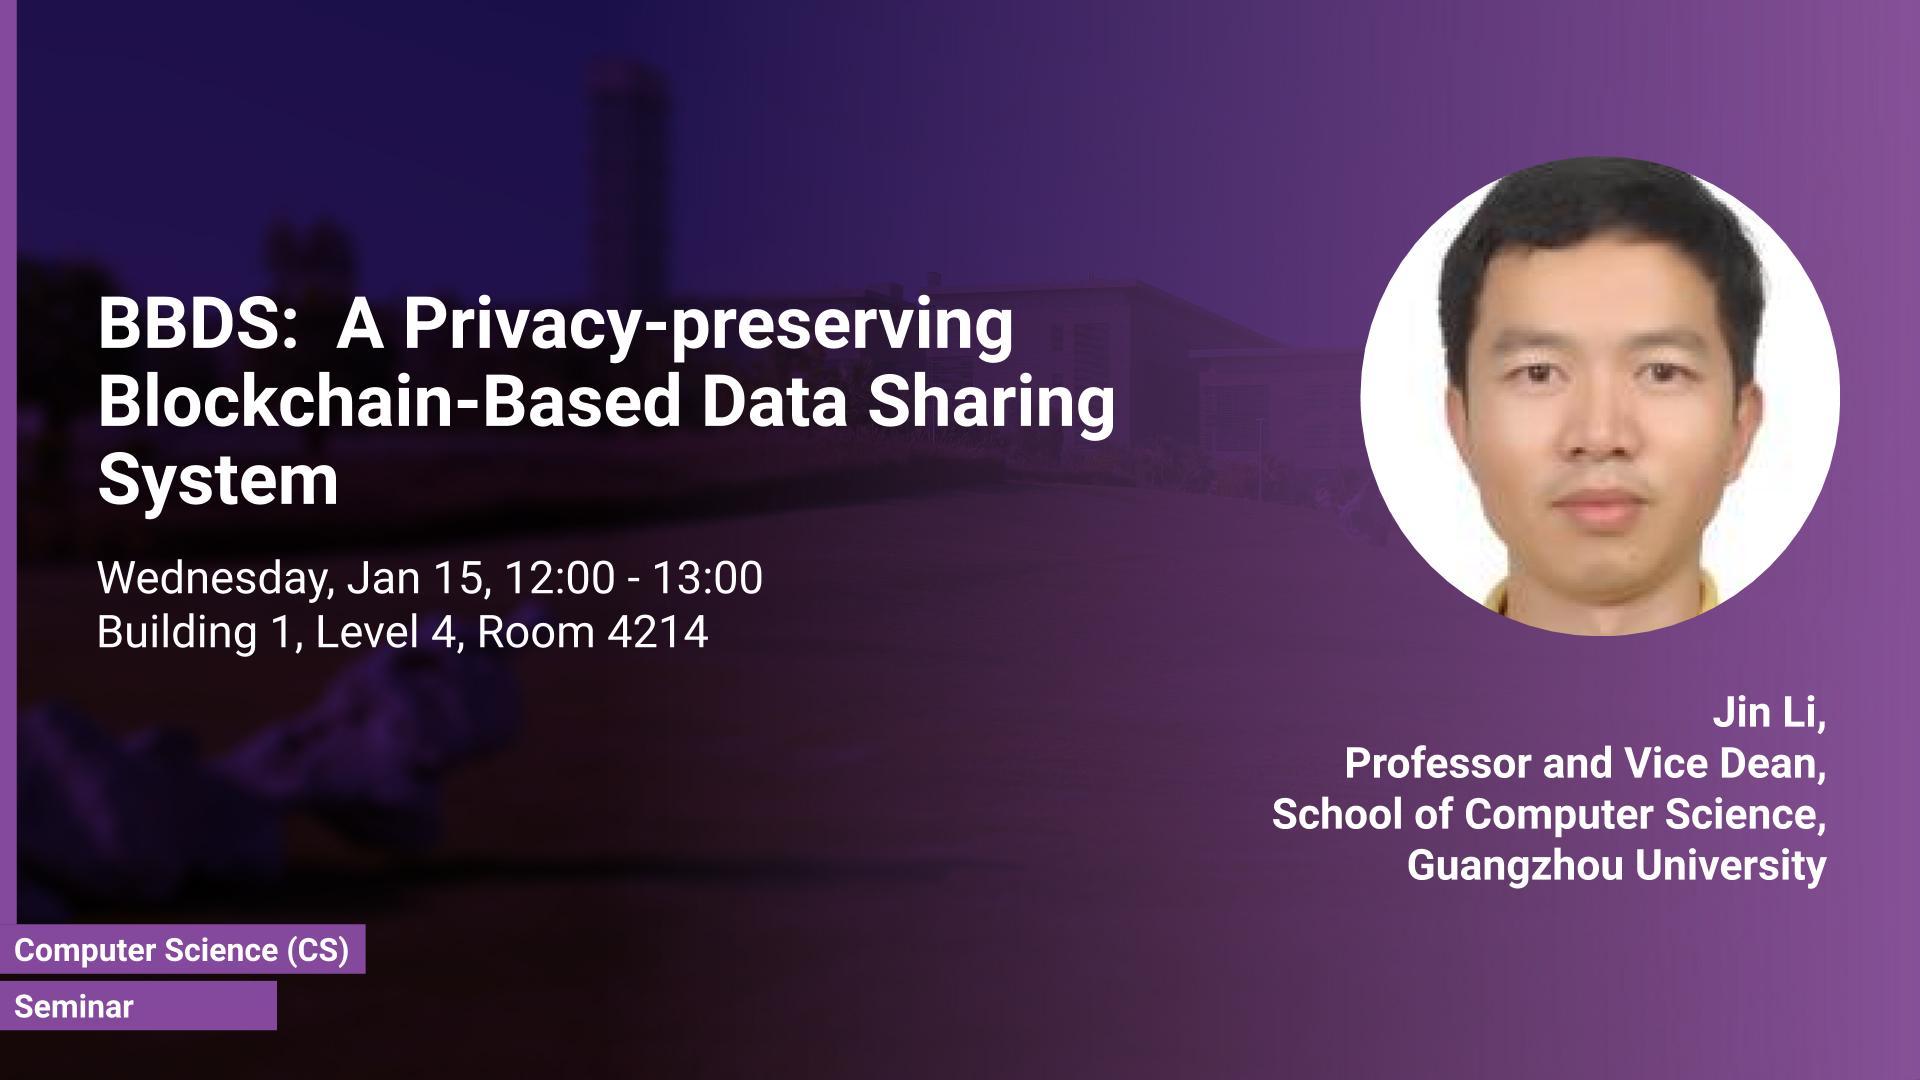 KAUST-CEMSE-CS-Seminar-Jin-Li-BBDS-A-Privacy-preserving-Blockchain-Based-Data-Sharing-System